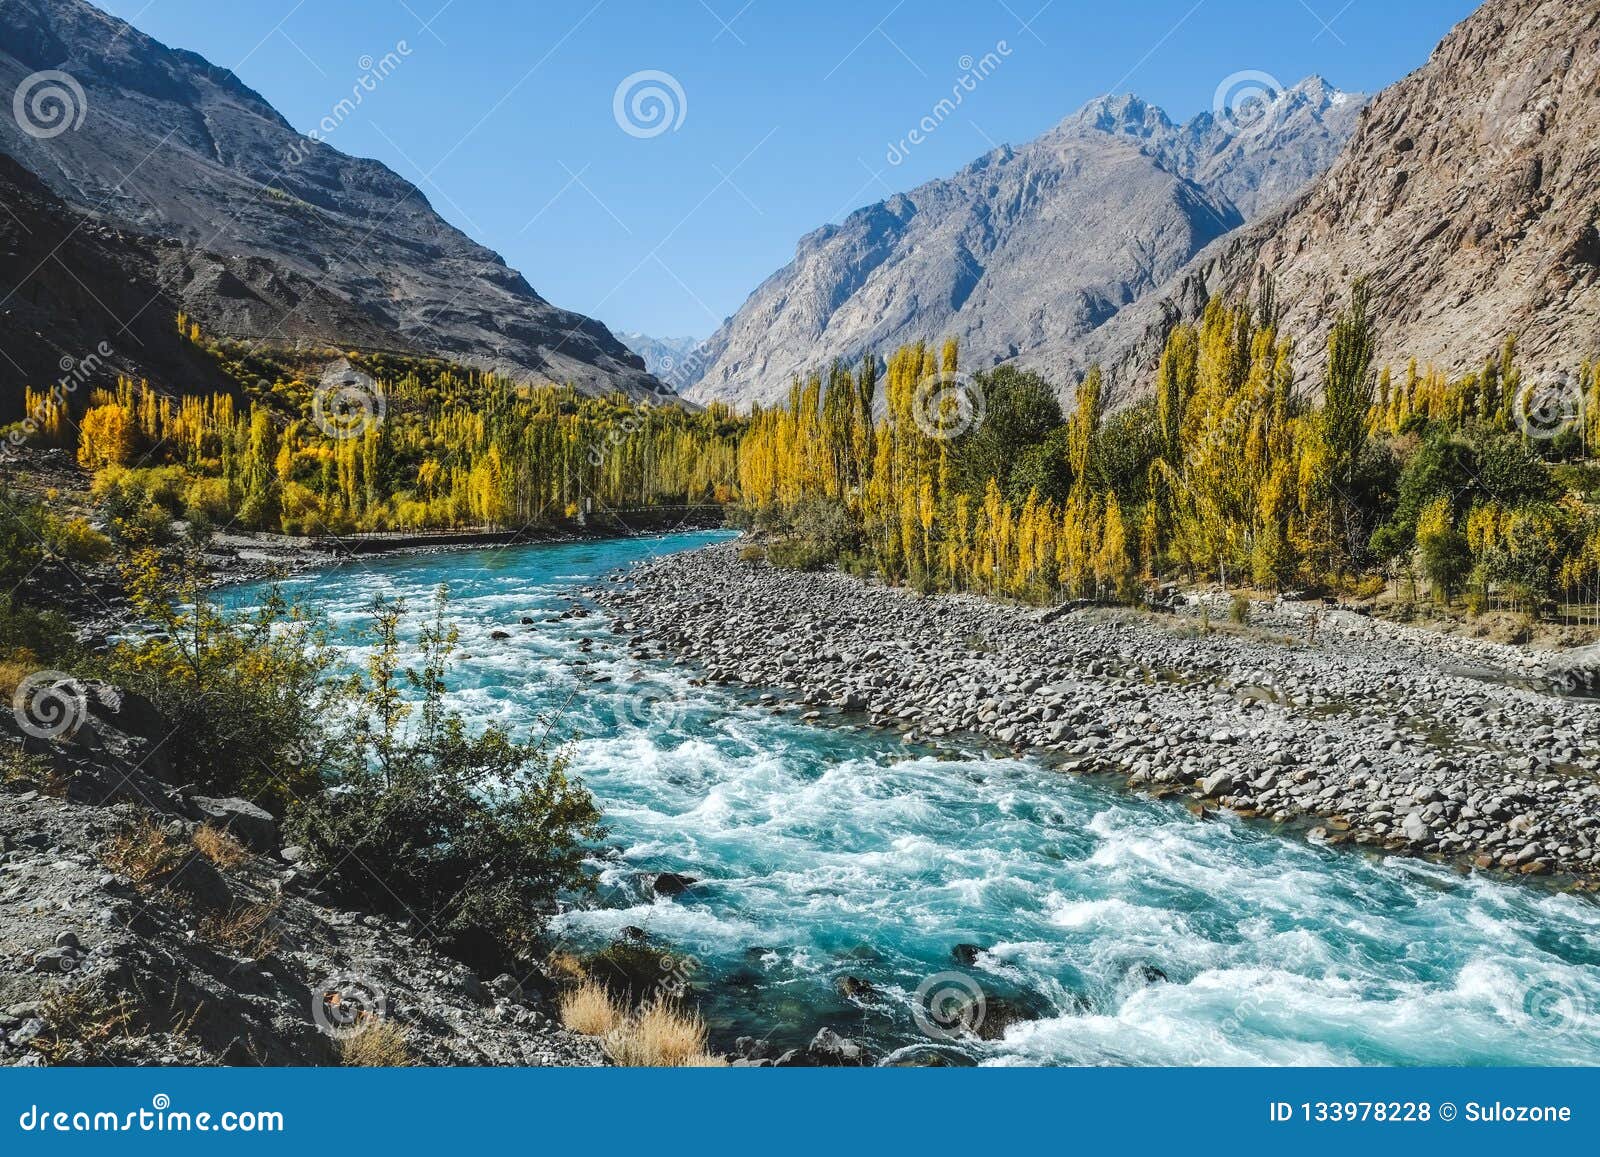 autumn scene, blue turqu oise water of gilgit river flowing through gupis,pakistan.